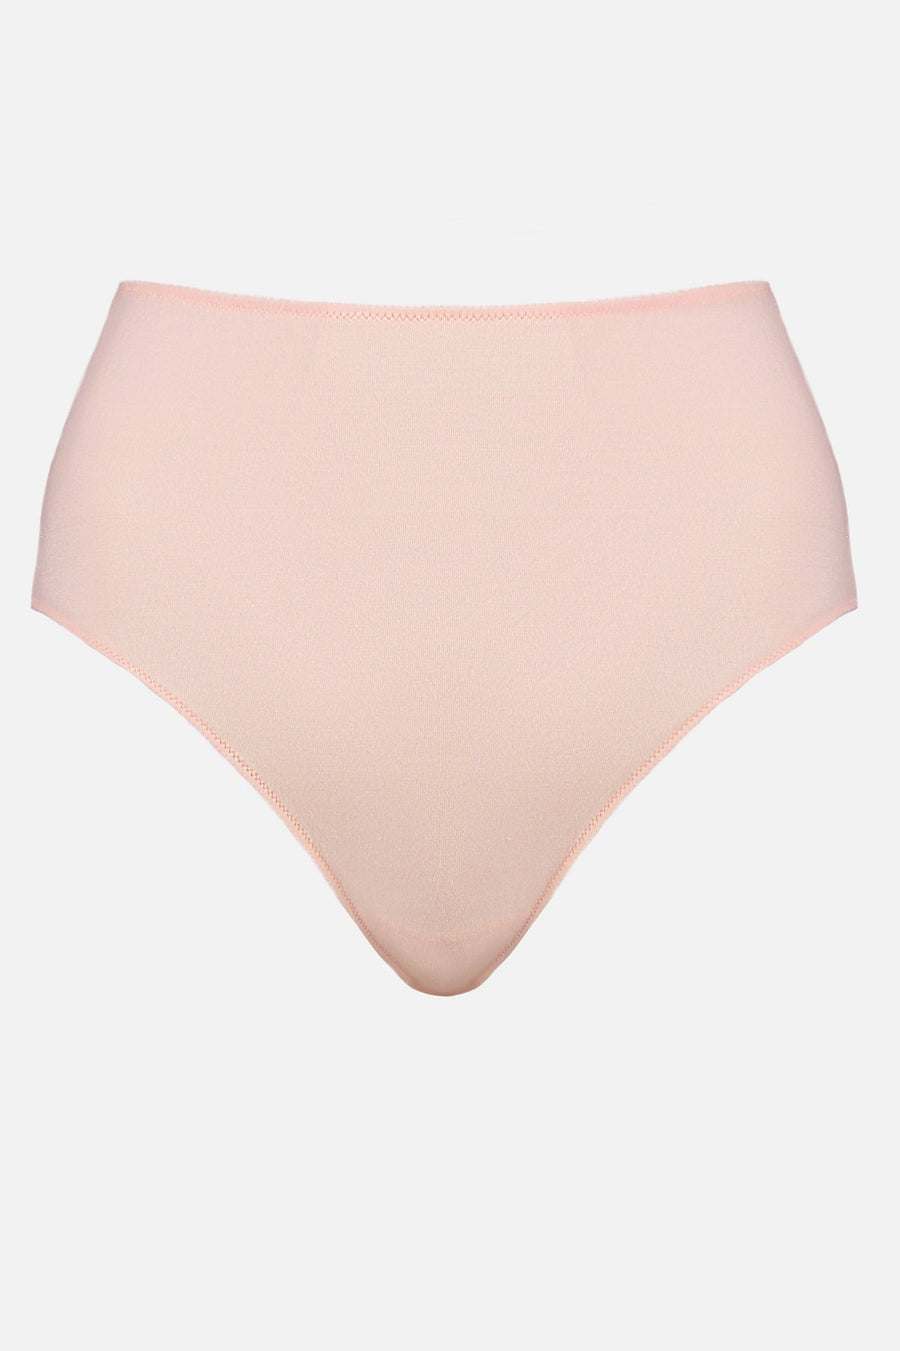 _videris_lingerie_whitney_high_waist_bikini_rosy_pink